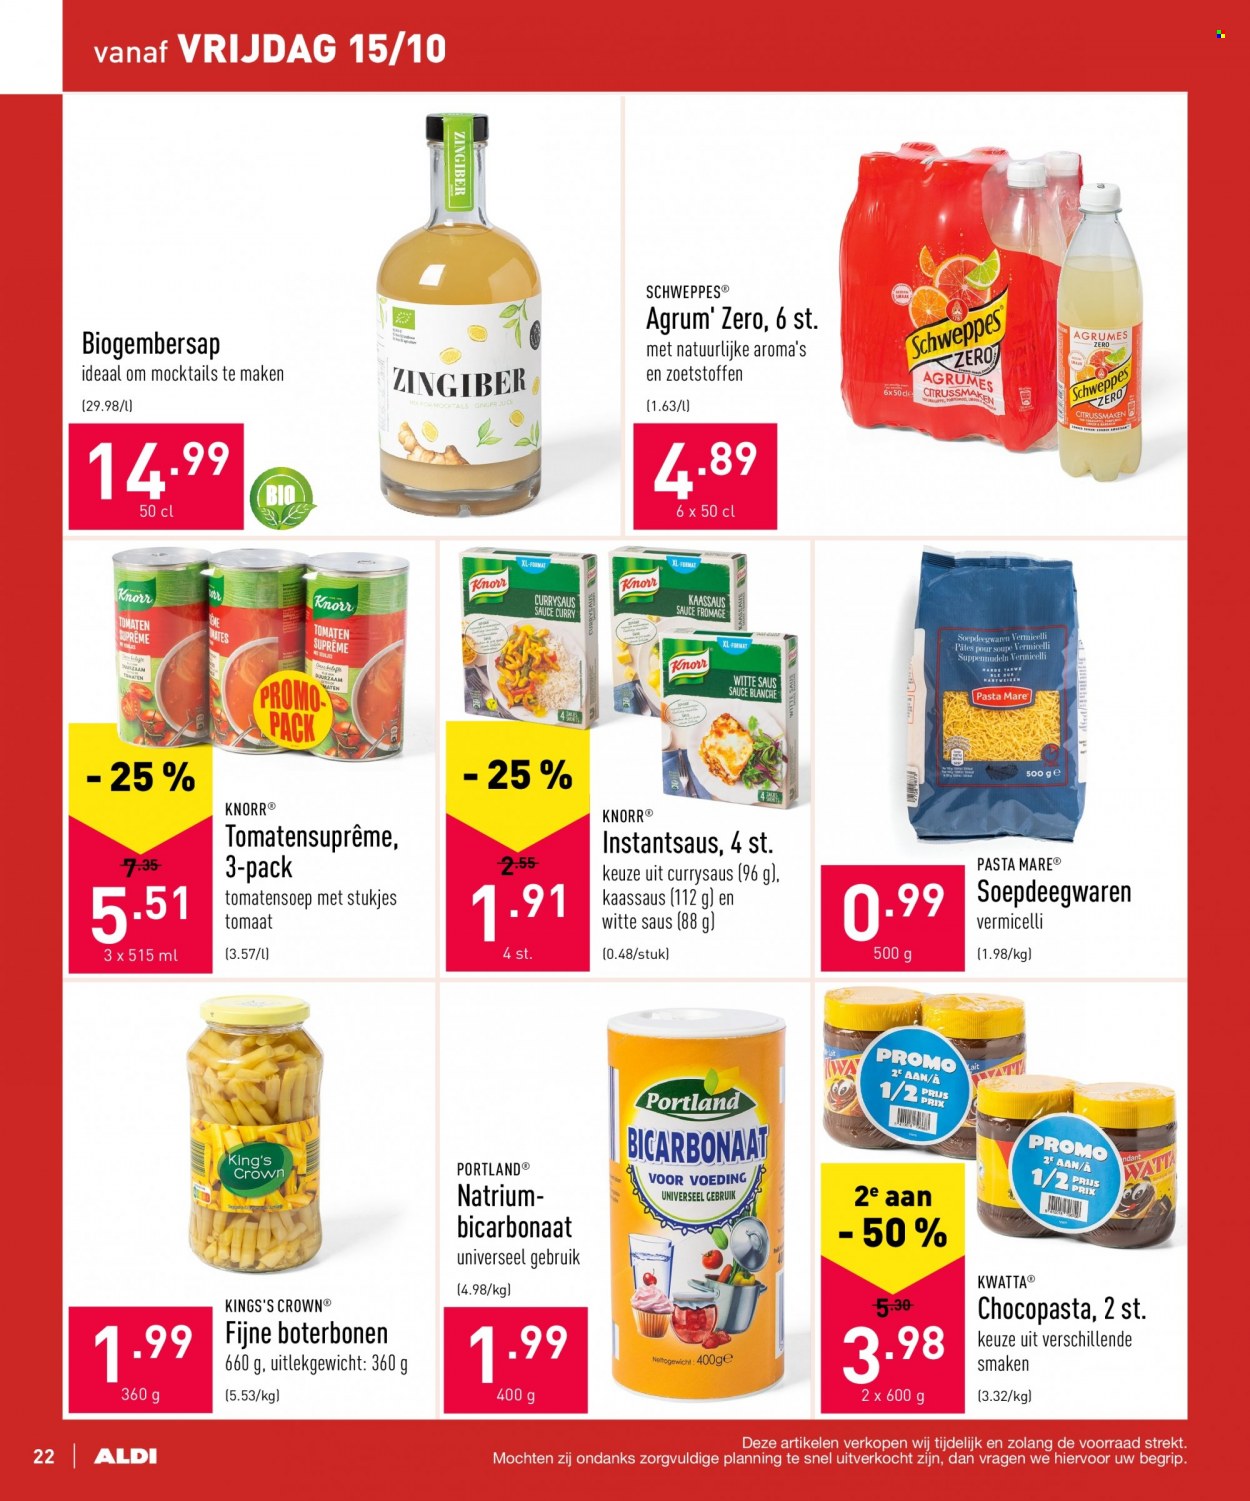 thumbnail - ALDI-aanbieding - 11/10/2021 - 22/10/2021 -  producten in de aanbieding - tomaten, Knorr, pasta, Vermicelli, Schweppes. Pagina 22.